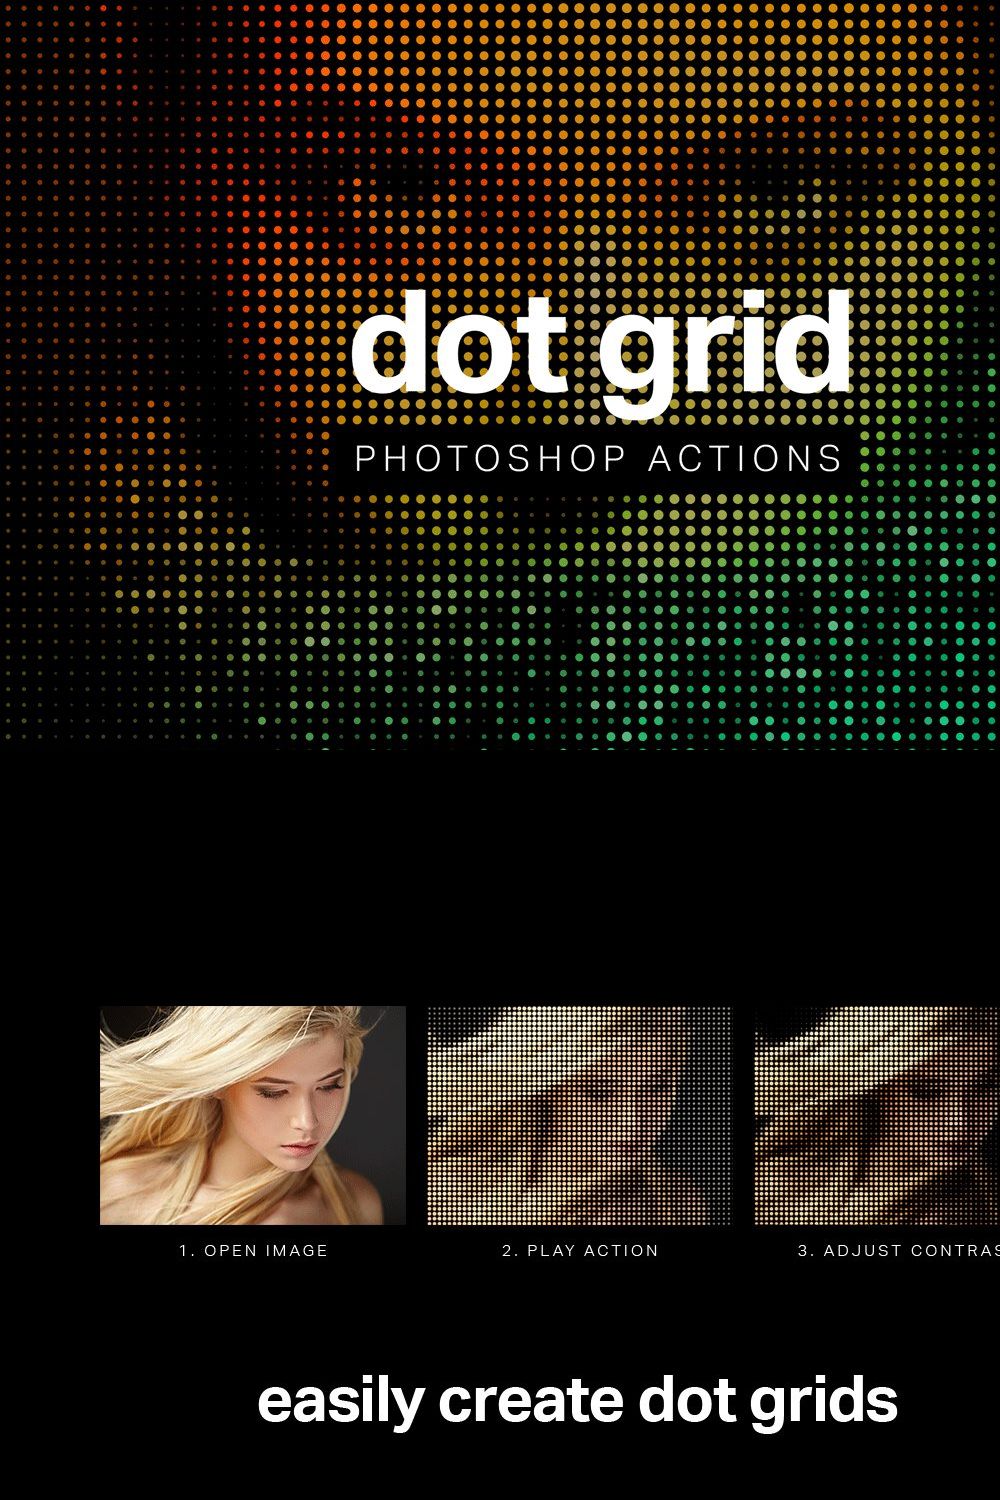 Dot Grid Photoshop Actions pinterest preview image.